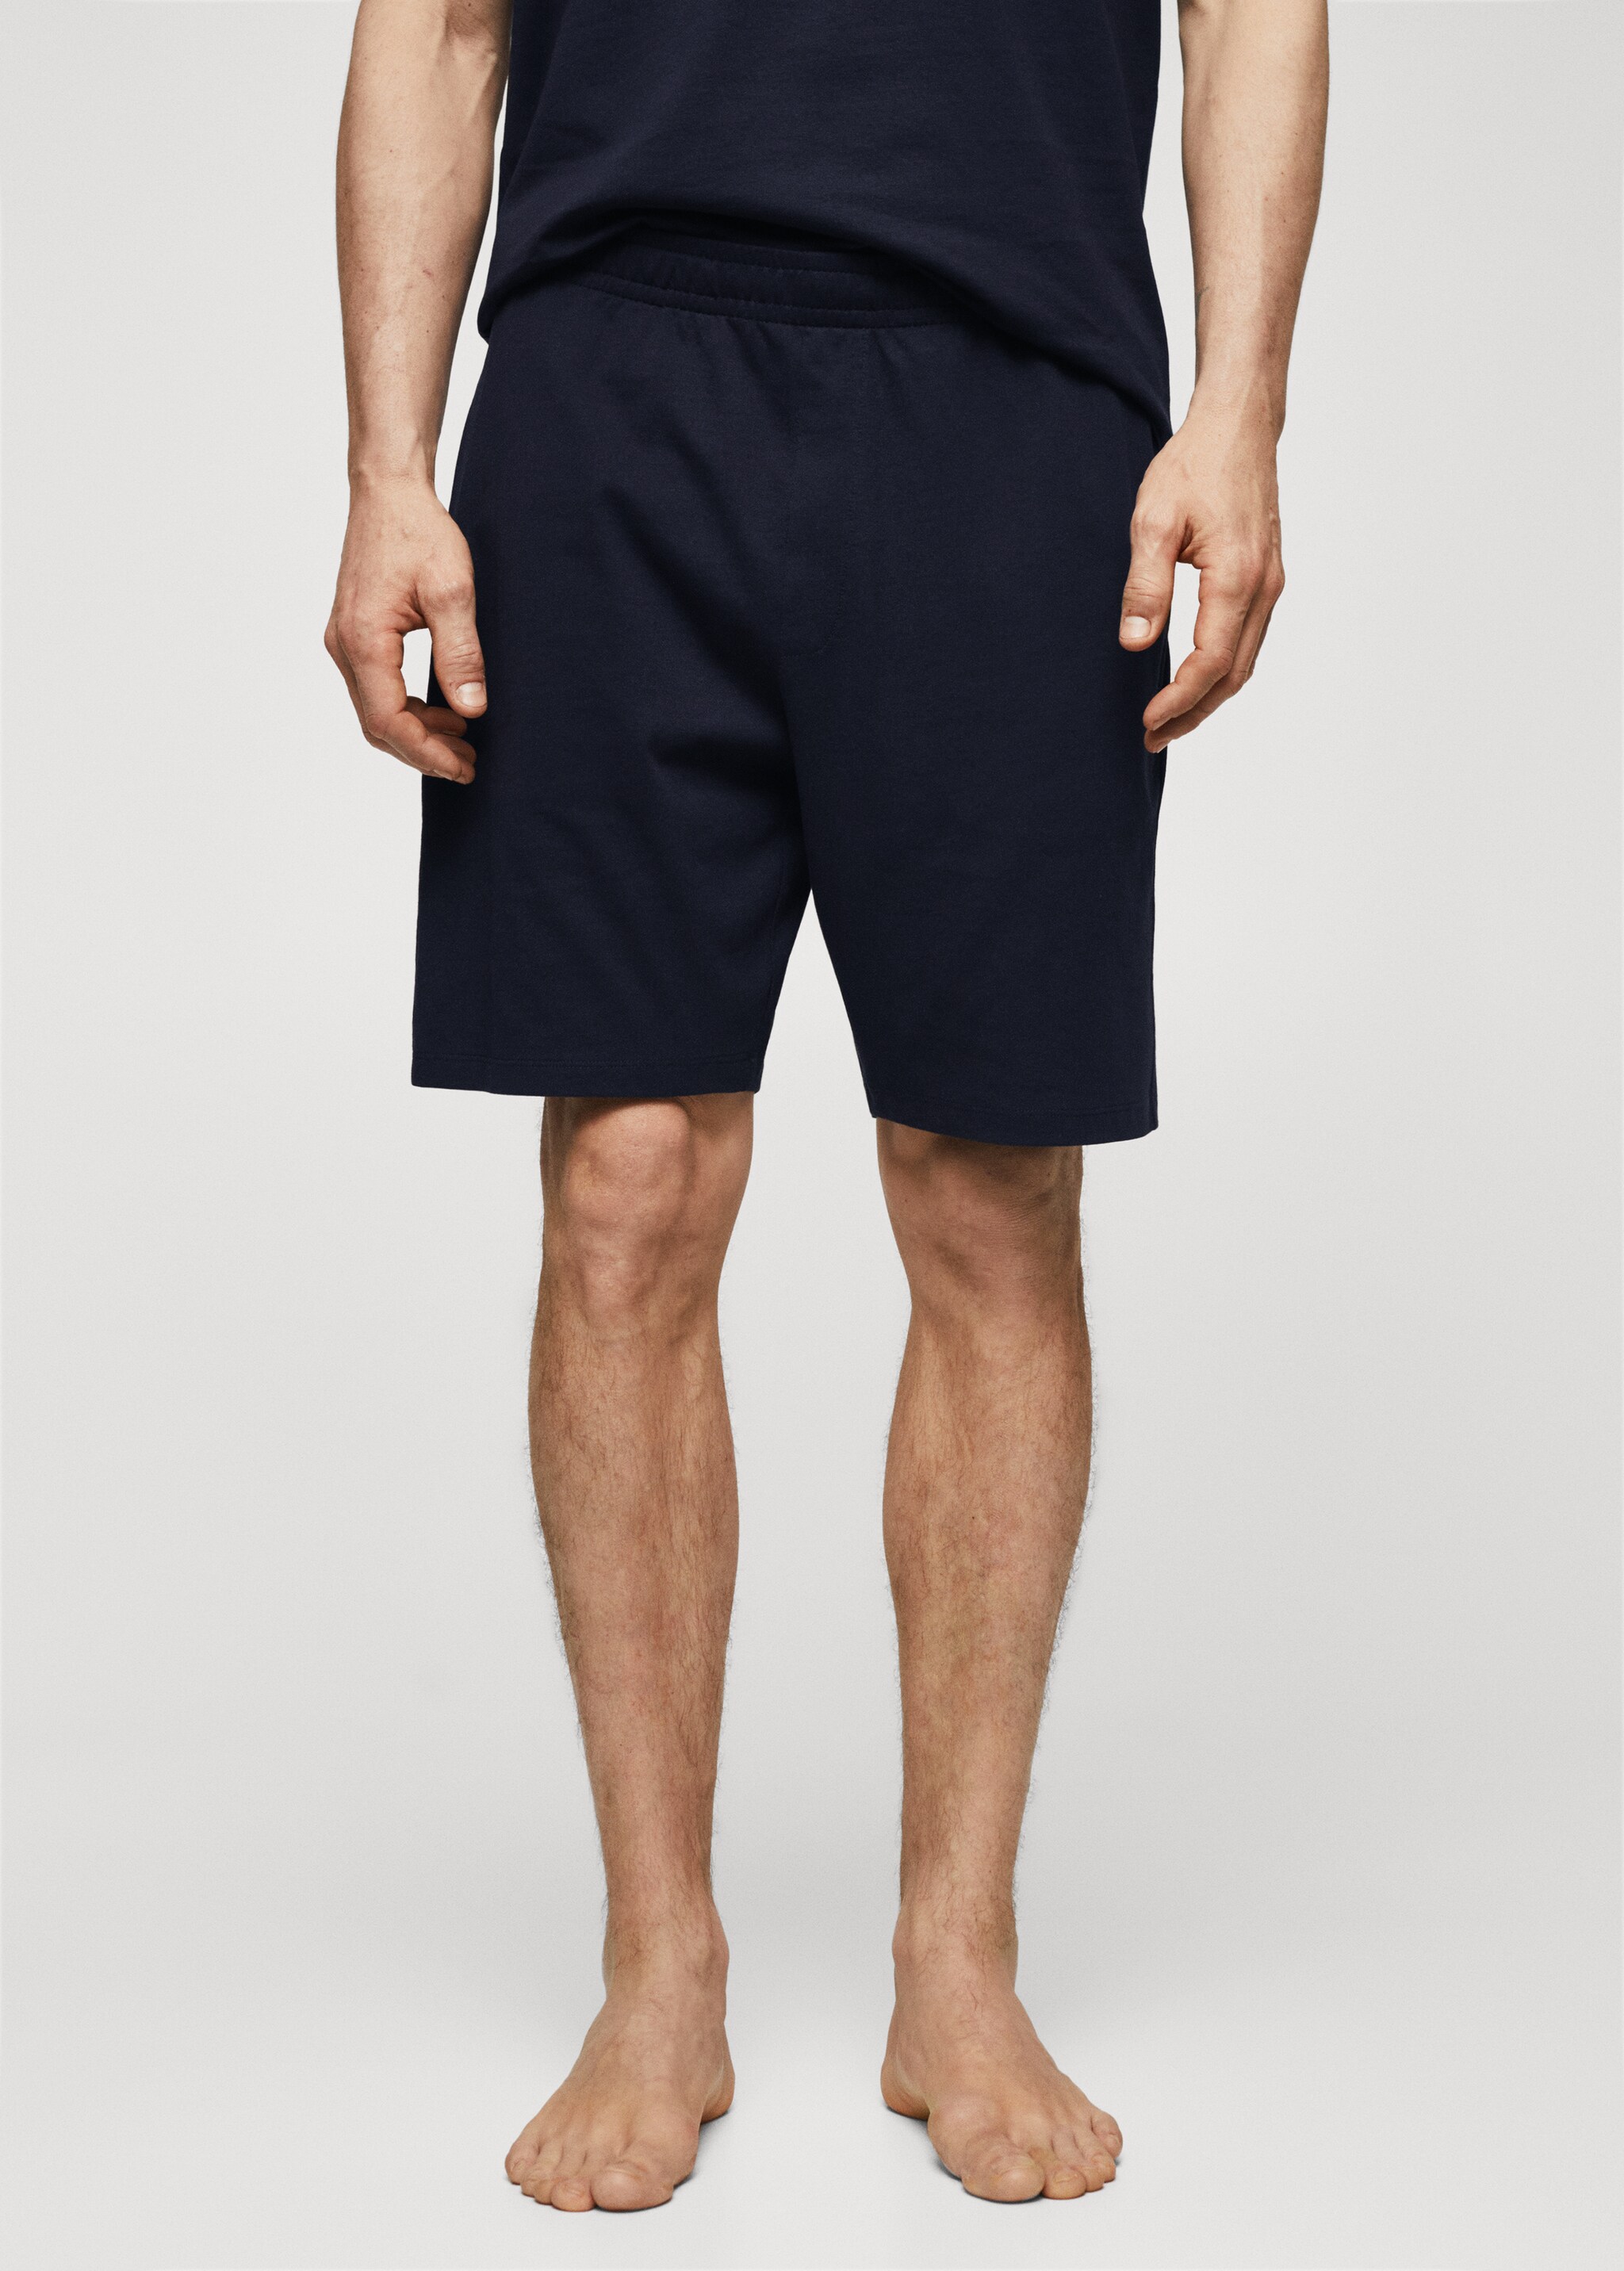 Cotton pyjama shorts pack - Medium plane